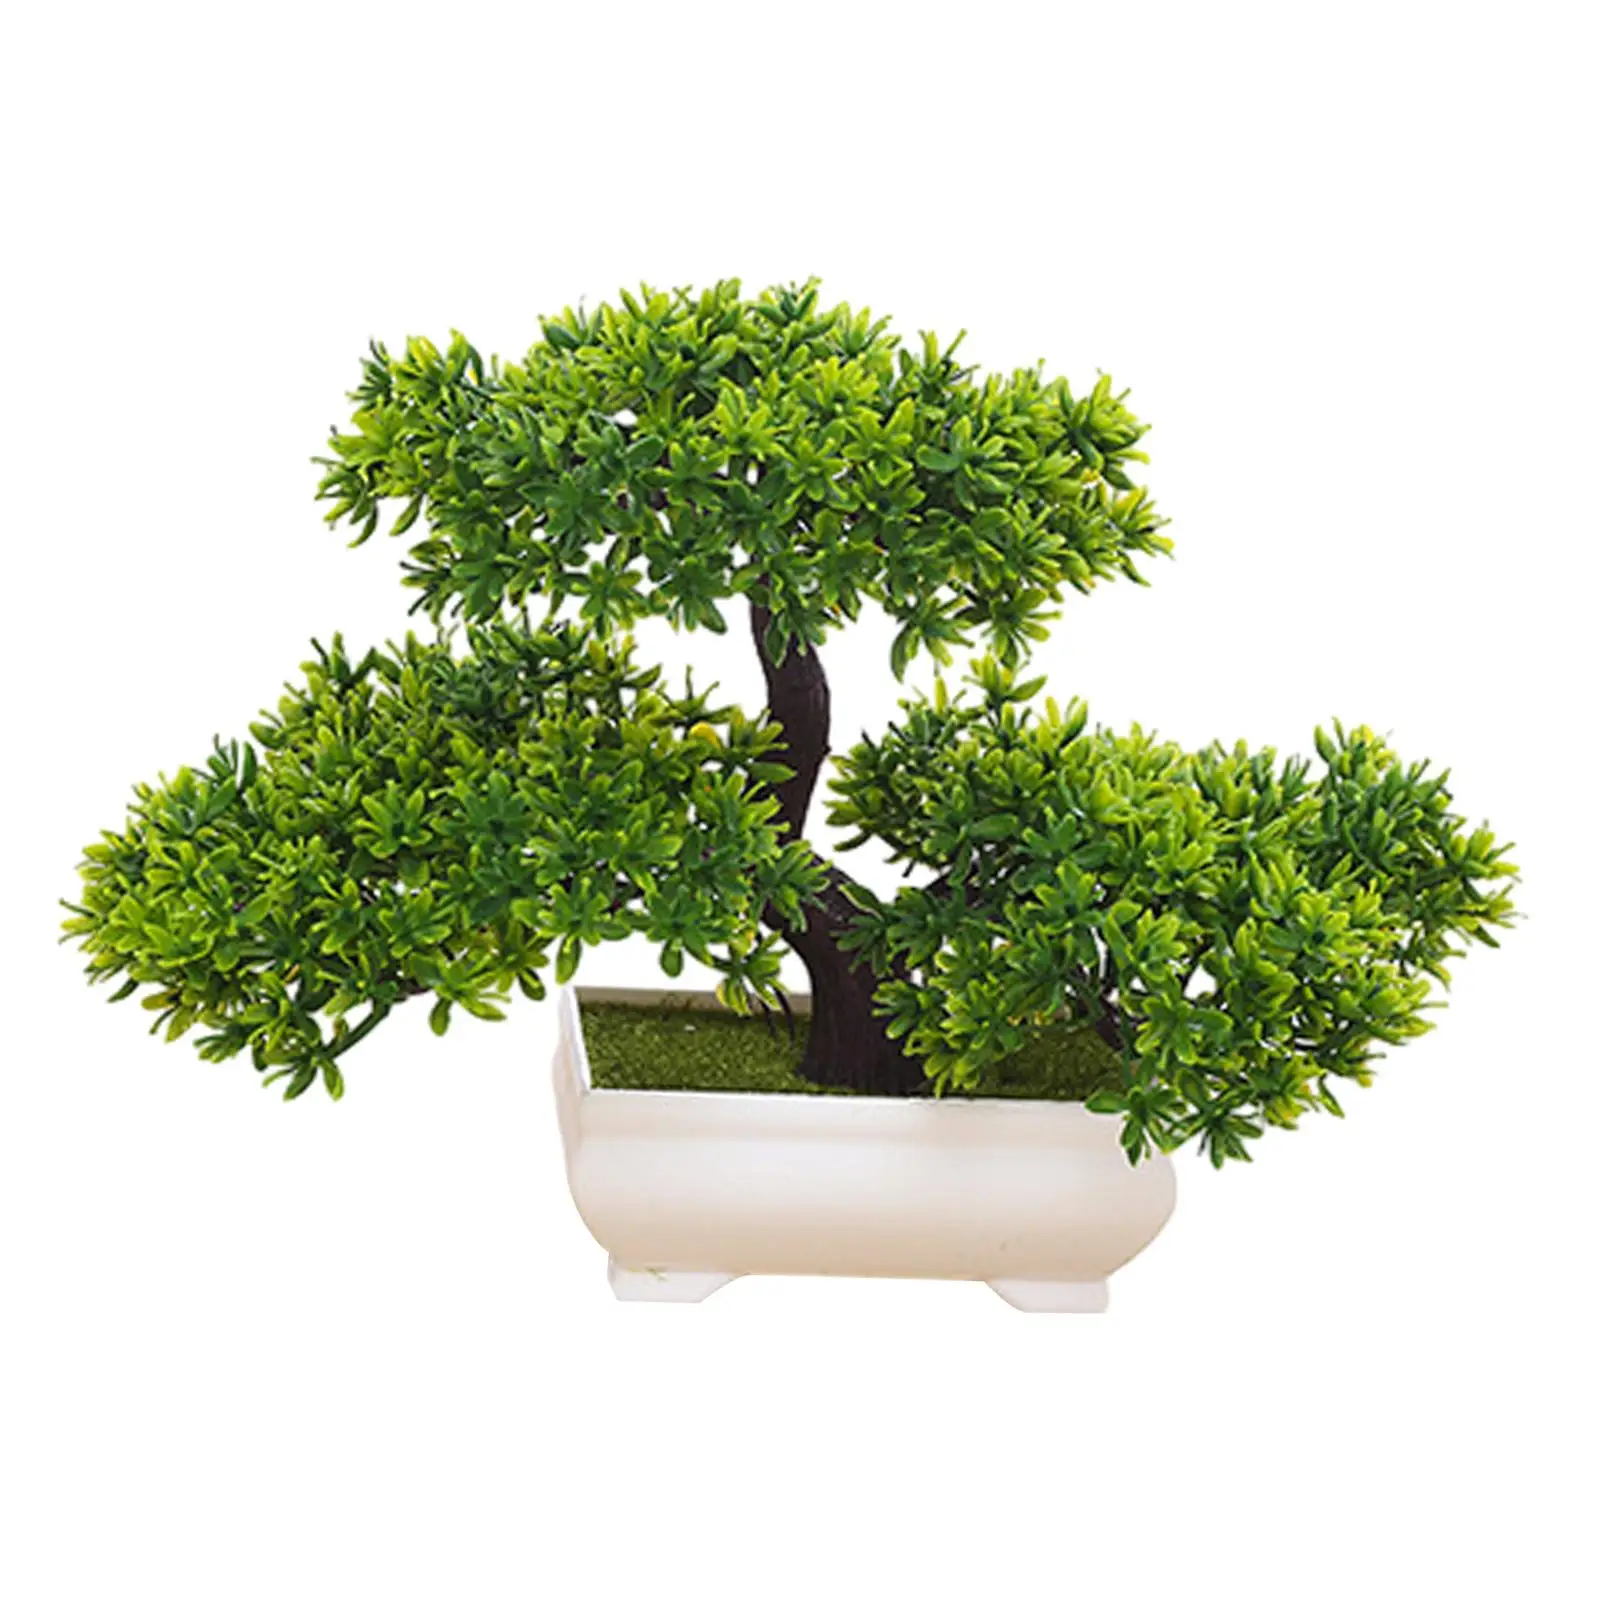 Artificial Bonsai Tree Zen Centerpiece Home Decor Simulation Table Faux Plants for Living Room Office Bedroom Bathroom